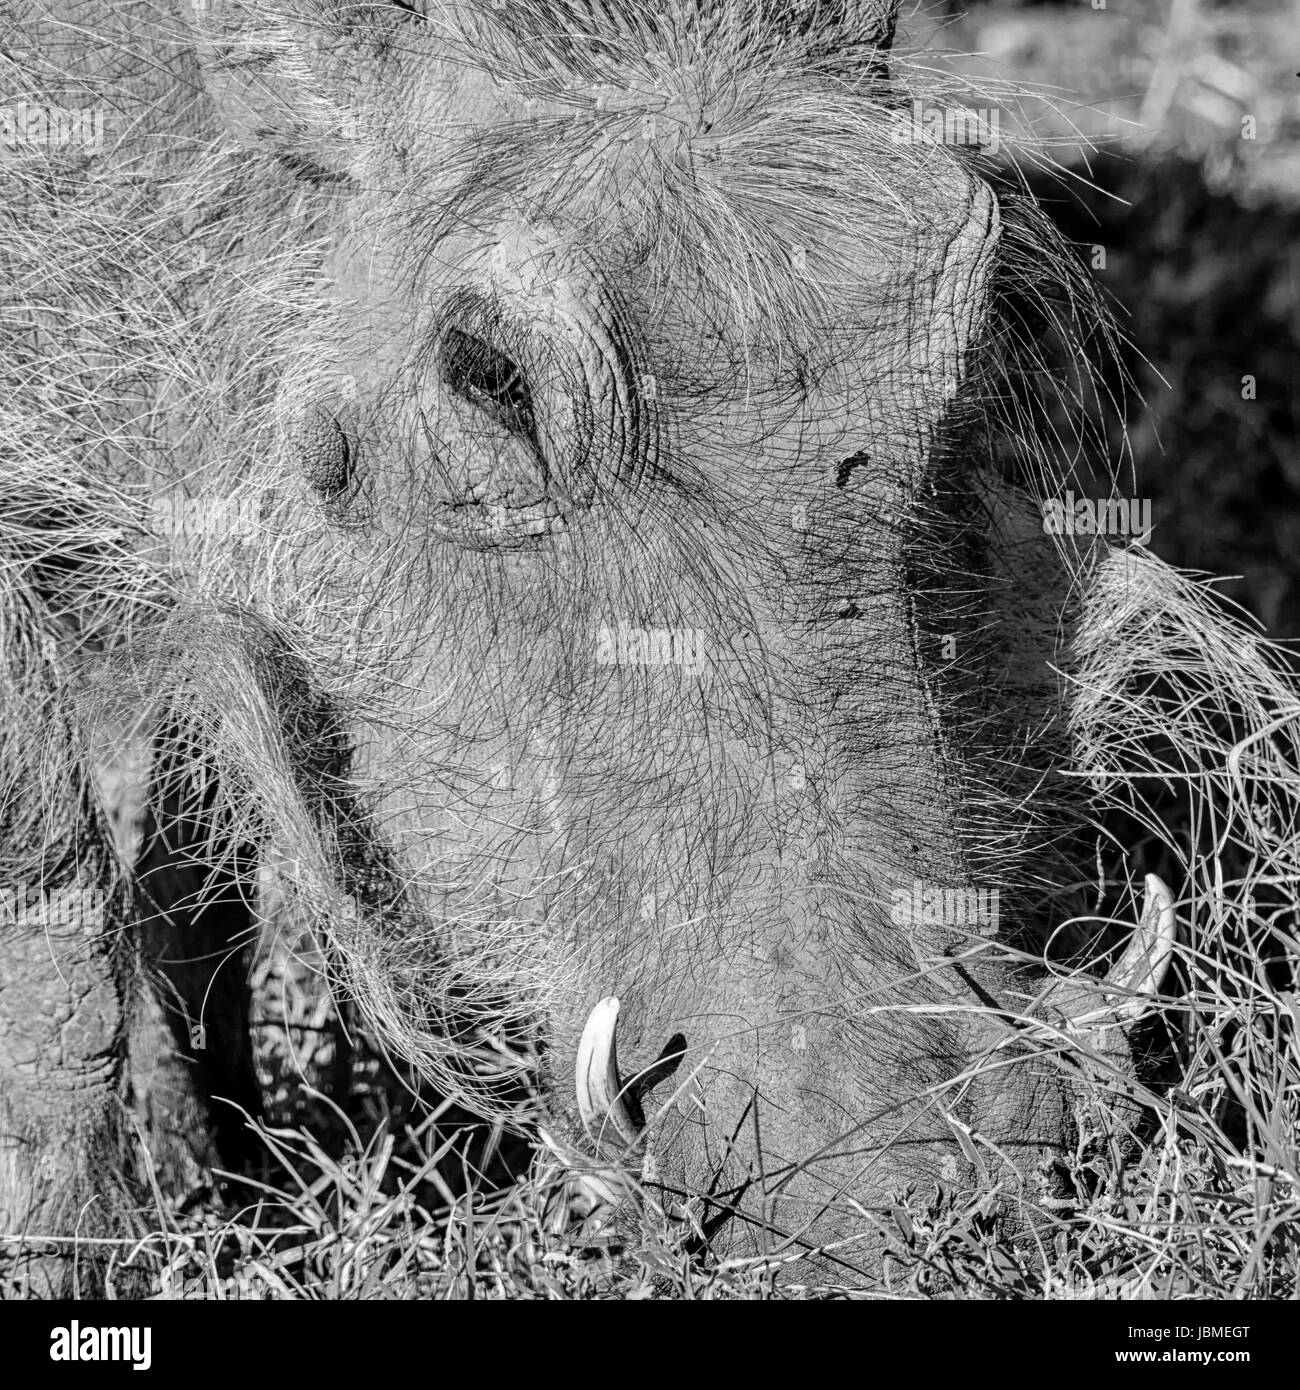 Warthog in Southern African savanna Stock Photo